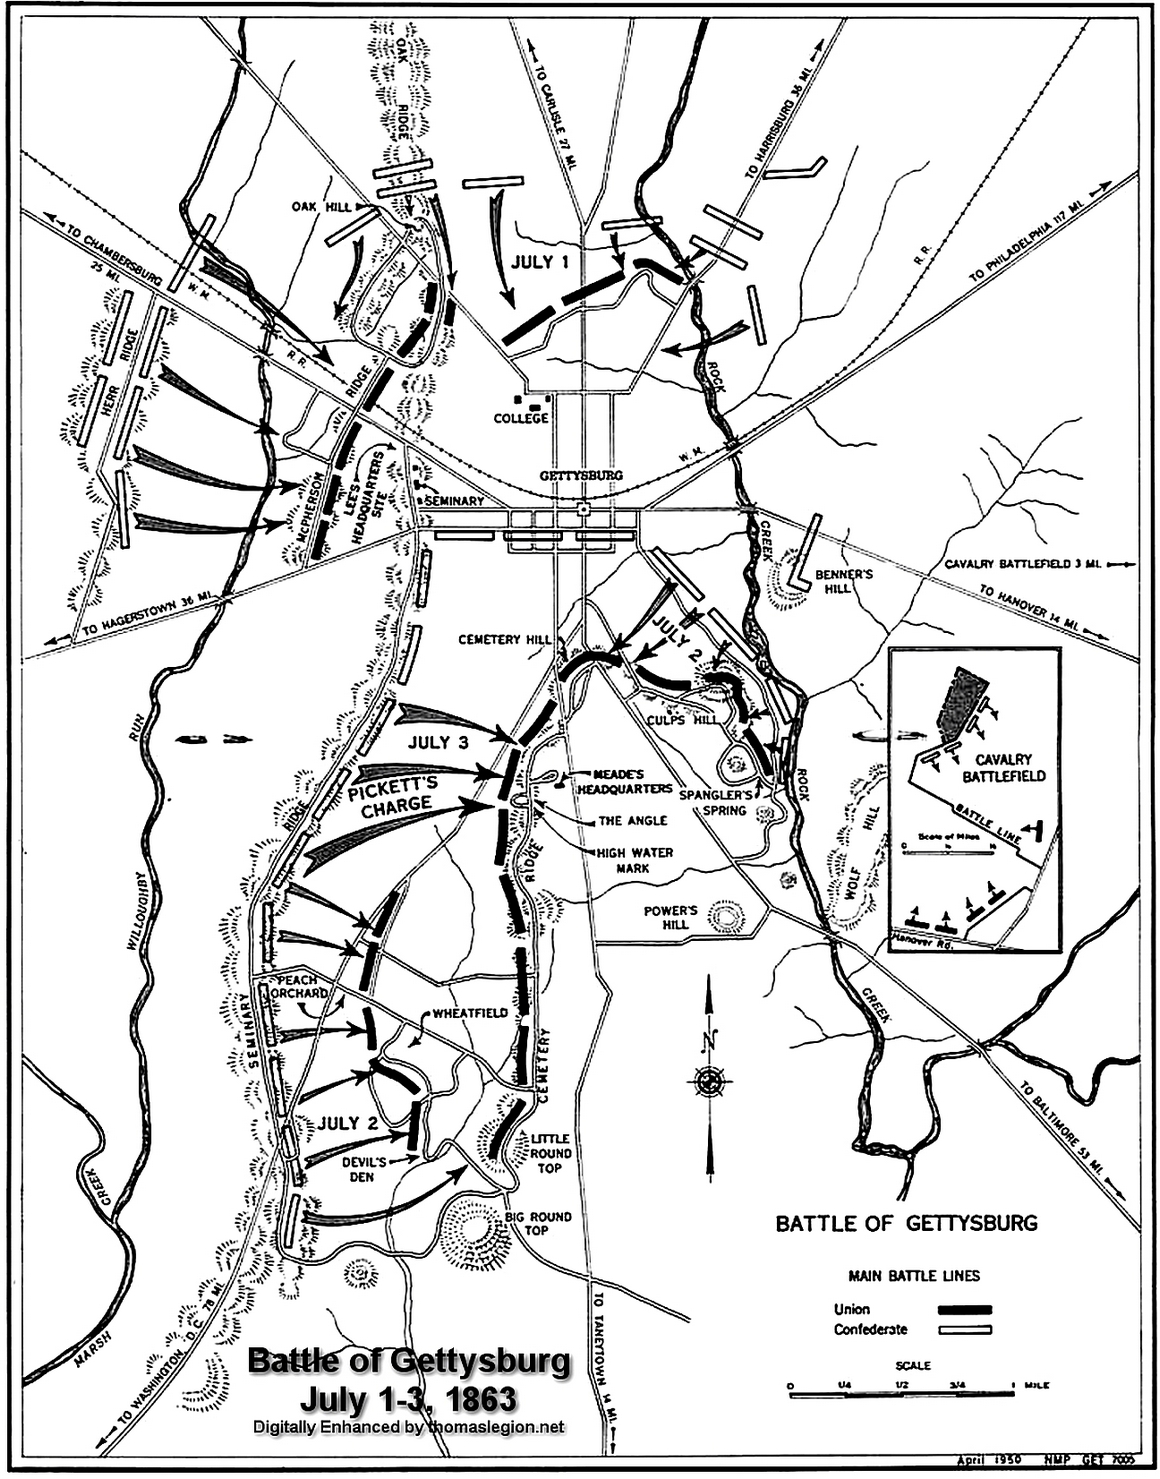 The Angle Battle of Gettysburg Map.jpg